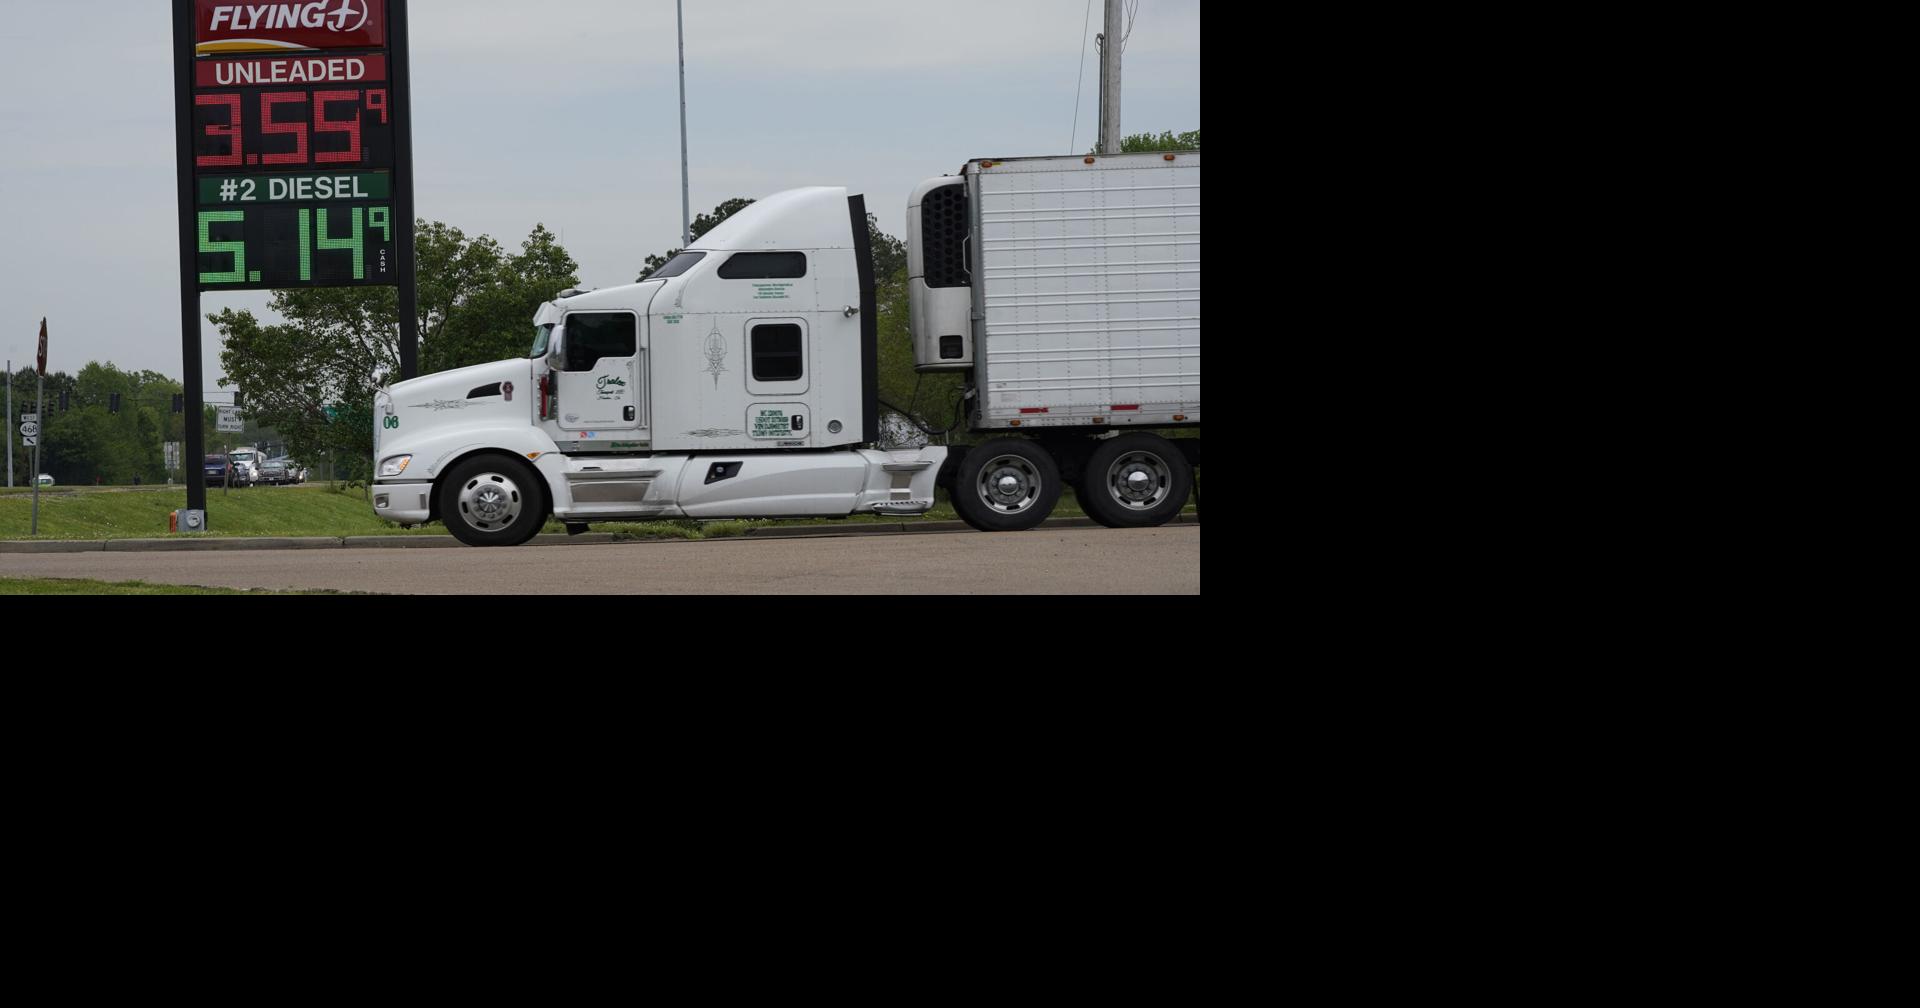 Nebraska diesel truck shop fined as part of national crackdown on emissions controls